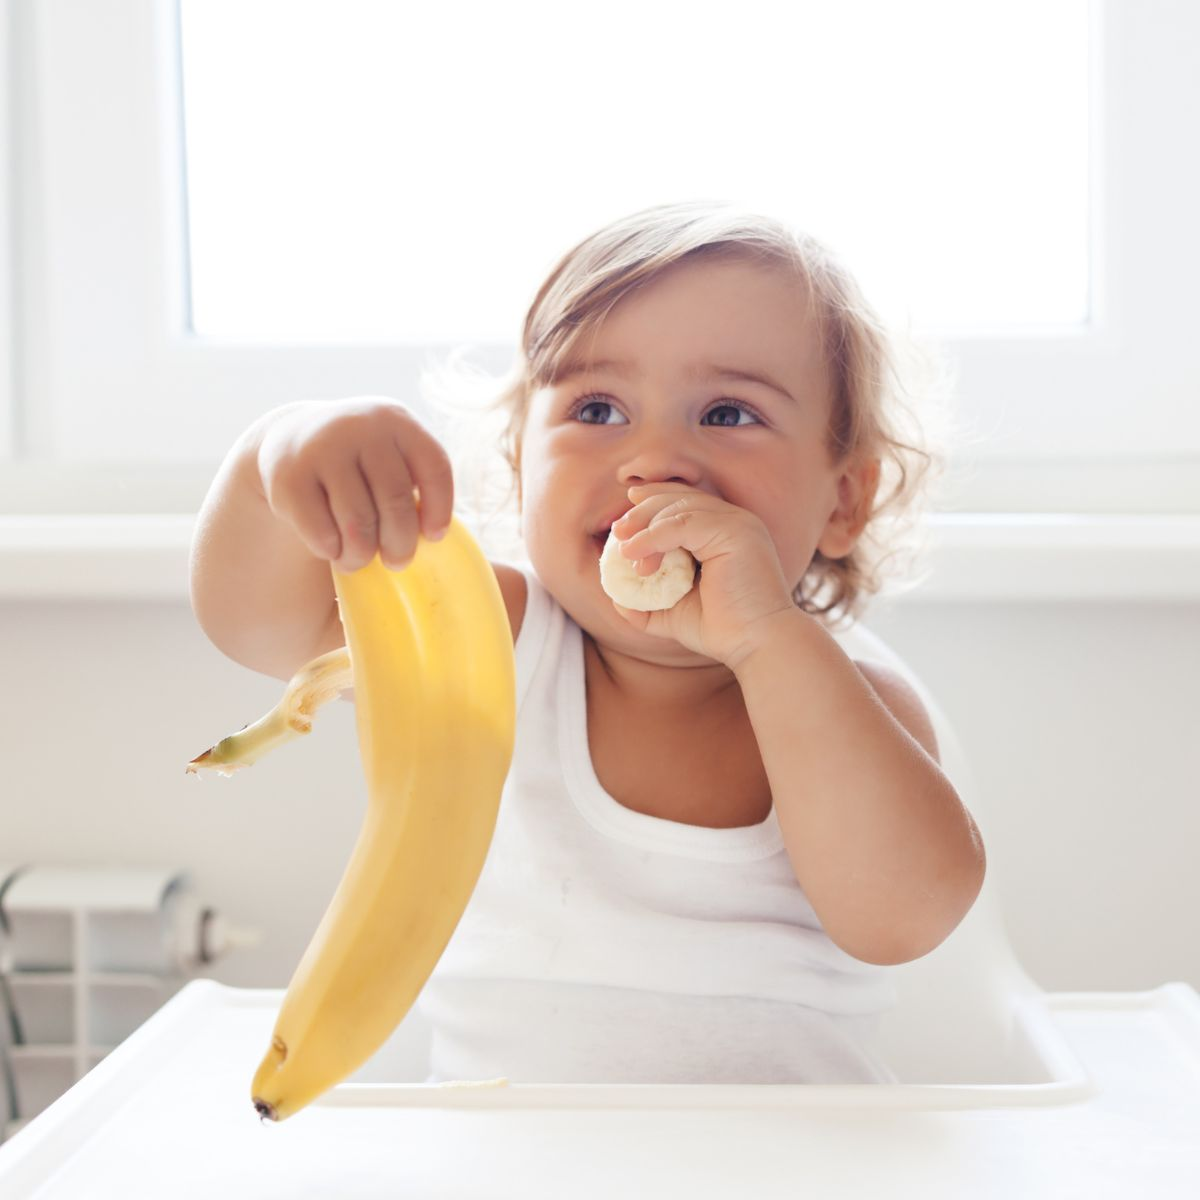 Baby eating banana: banana's encourage healthy weight gain in babies